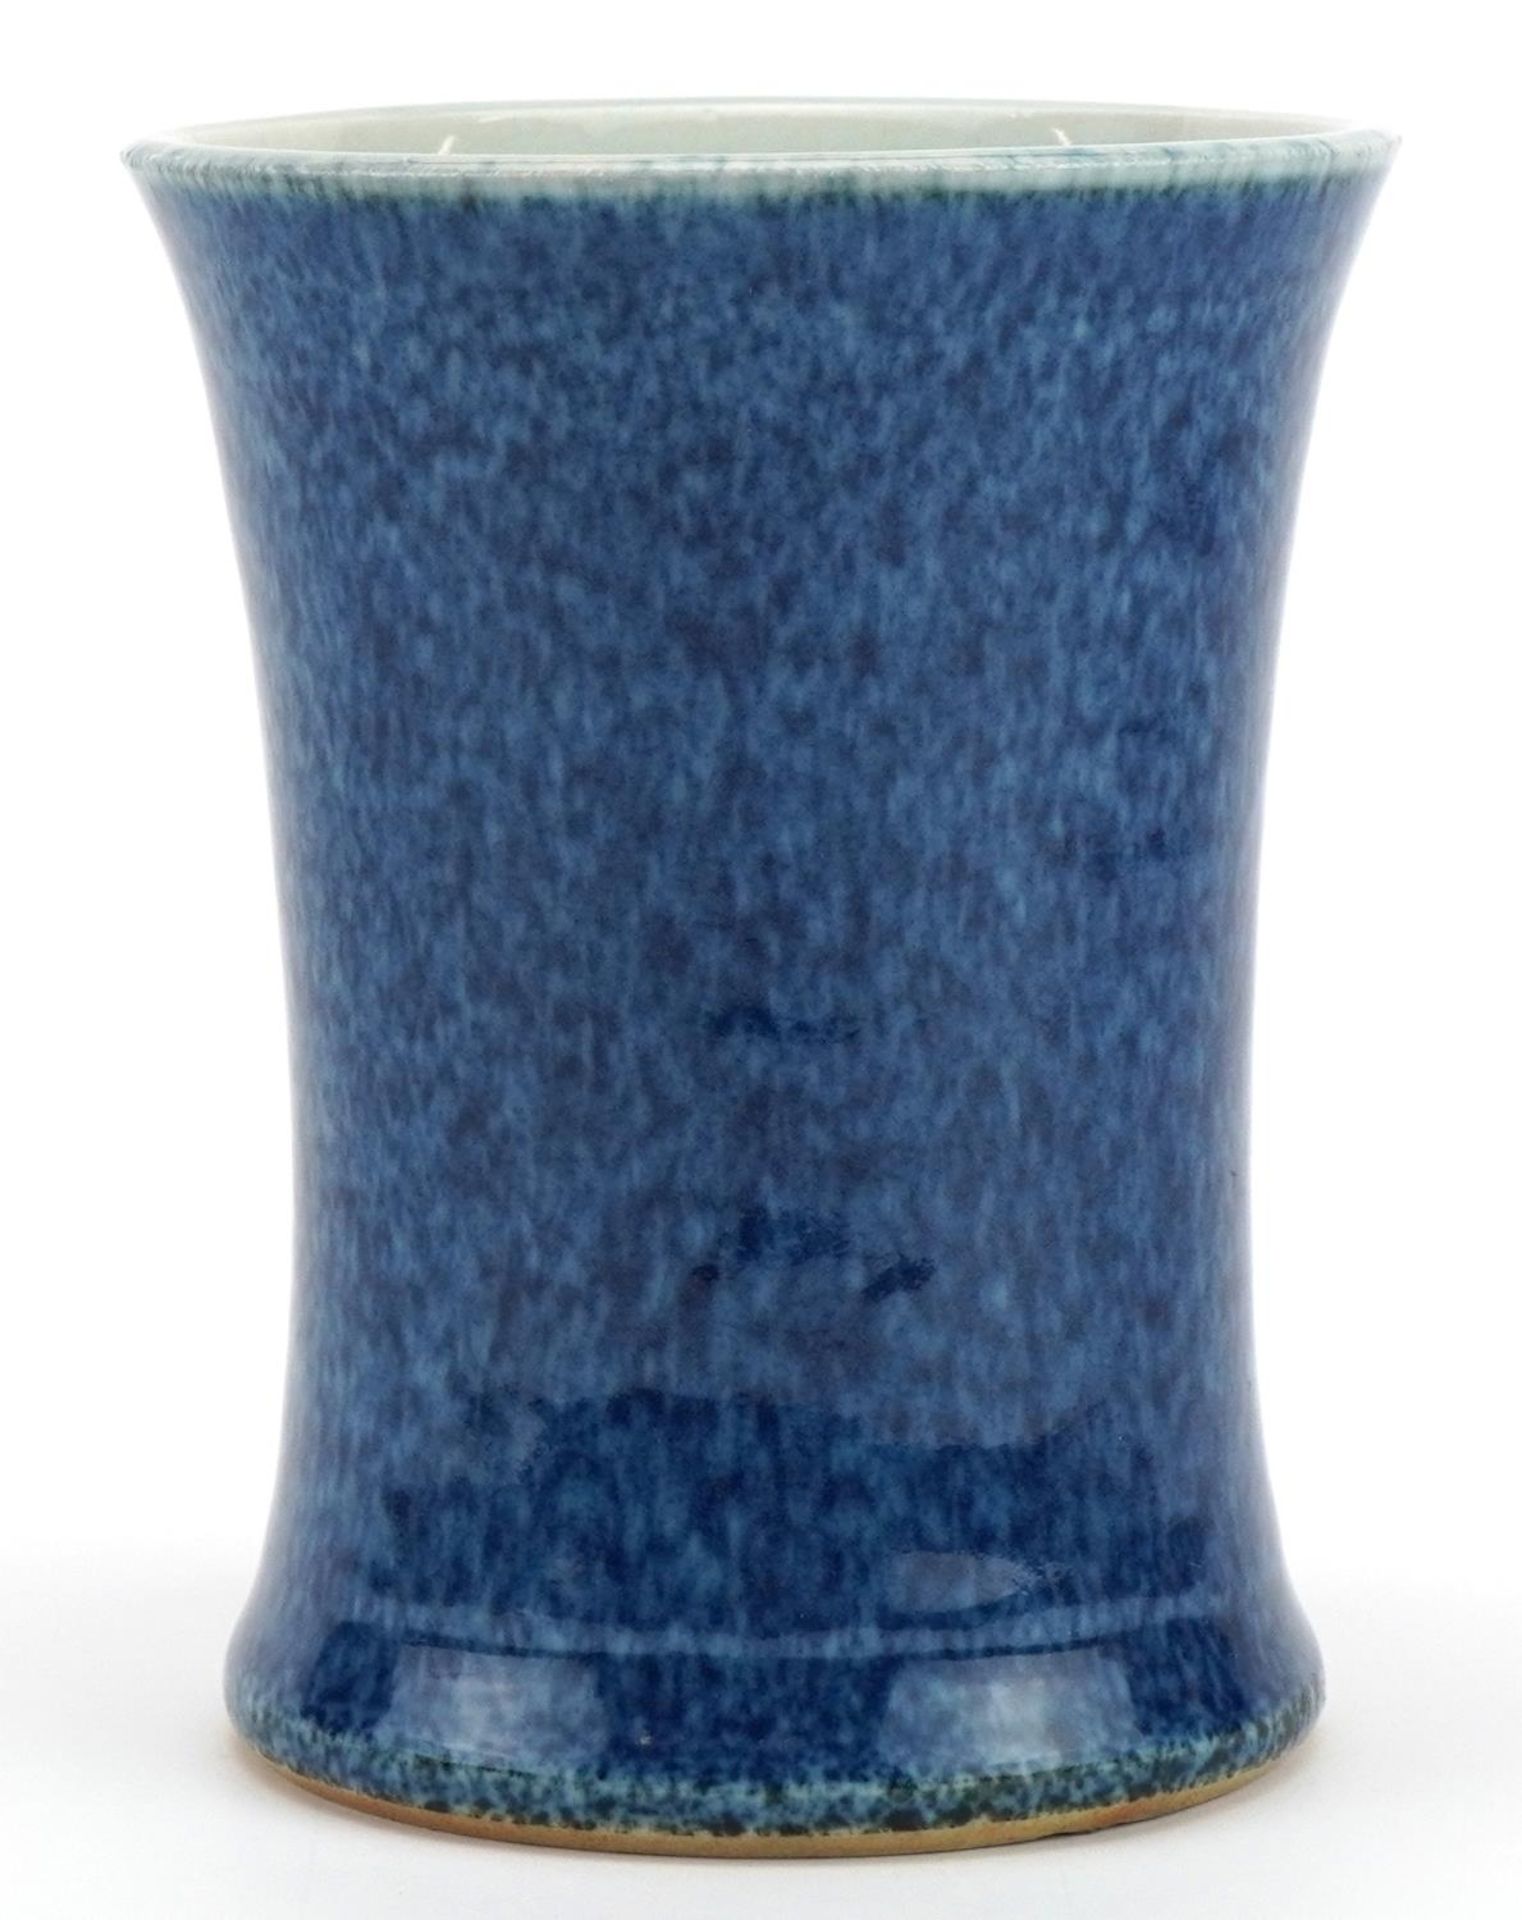 Chinese porcelain brush pot with waisted body having a powder blue glaze, 15cm high